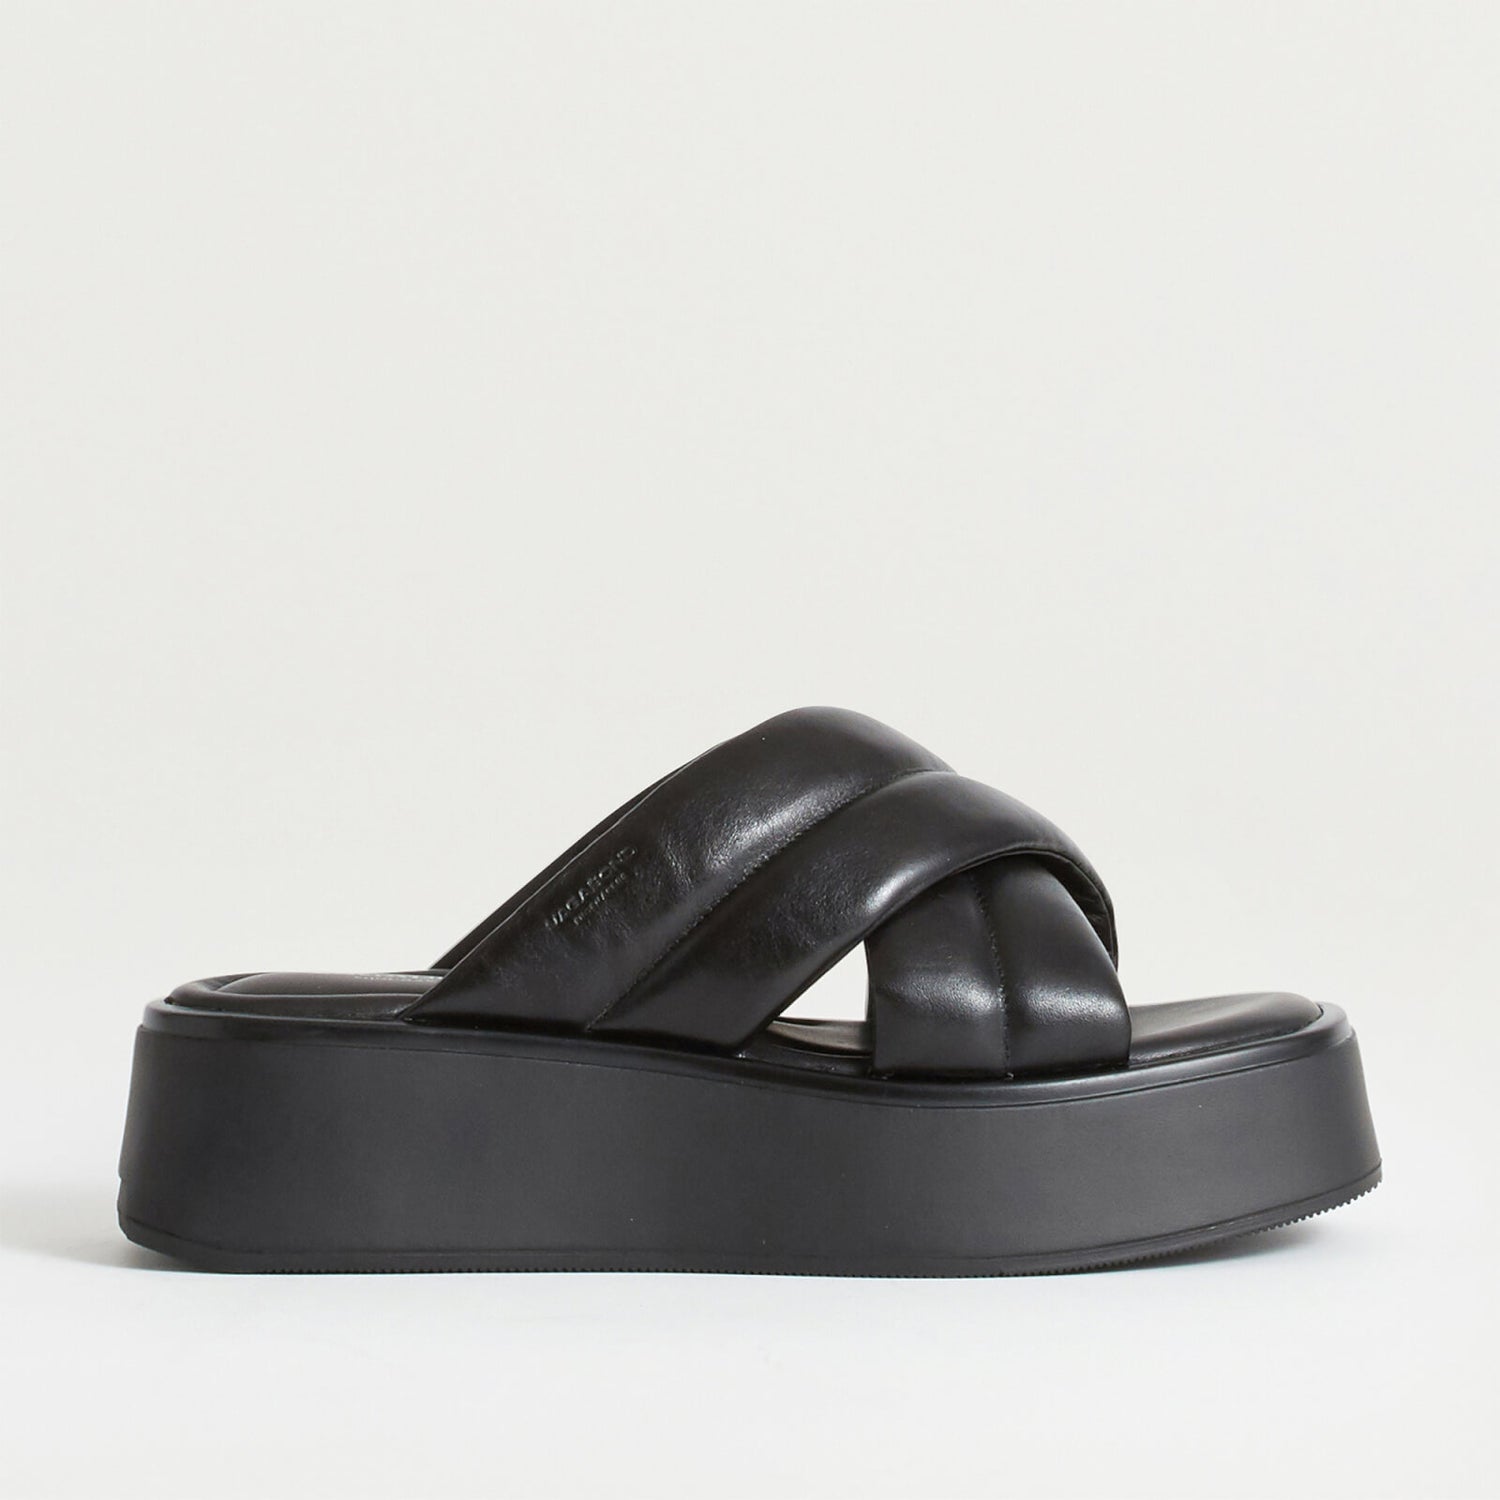 Vagabond Women's Courtney Leather Flatform Sandals - Black/Black - UK 3